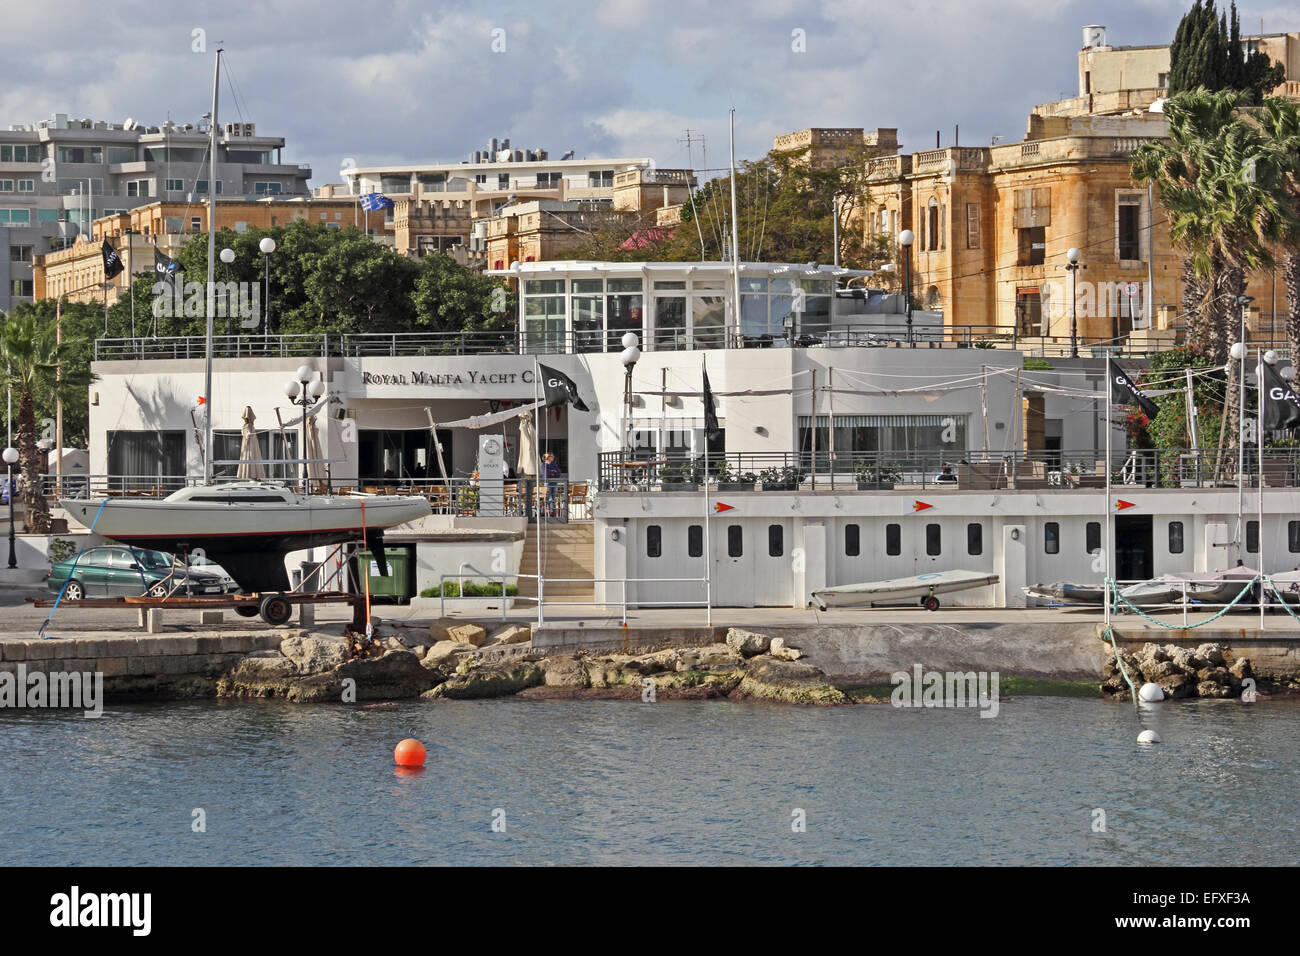 Royal Malta Yacht Club, Grand Harbour, Ta' Xbiex, Malta Stock Photo